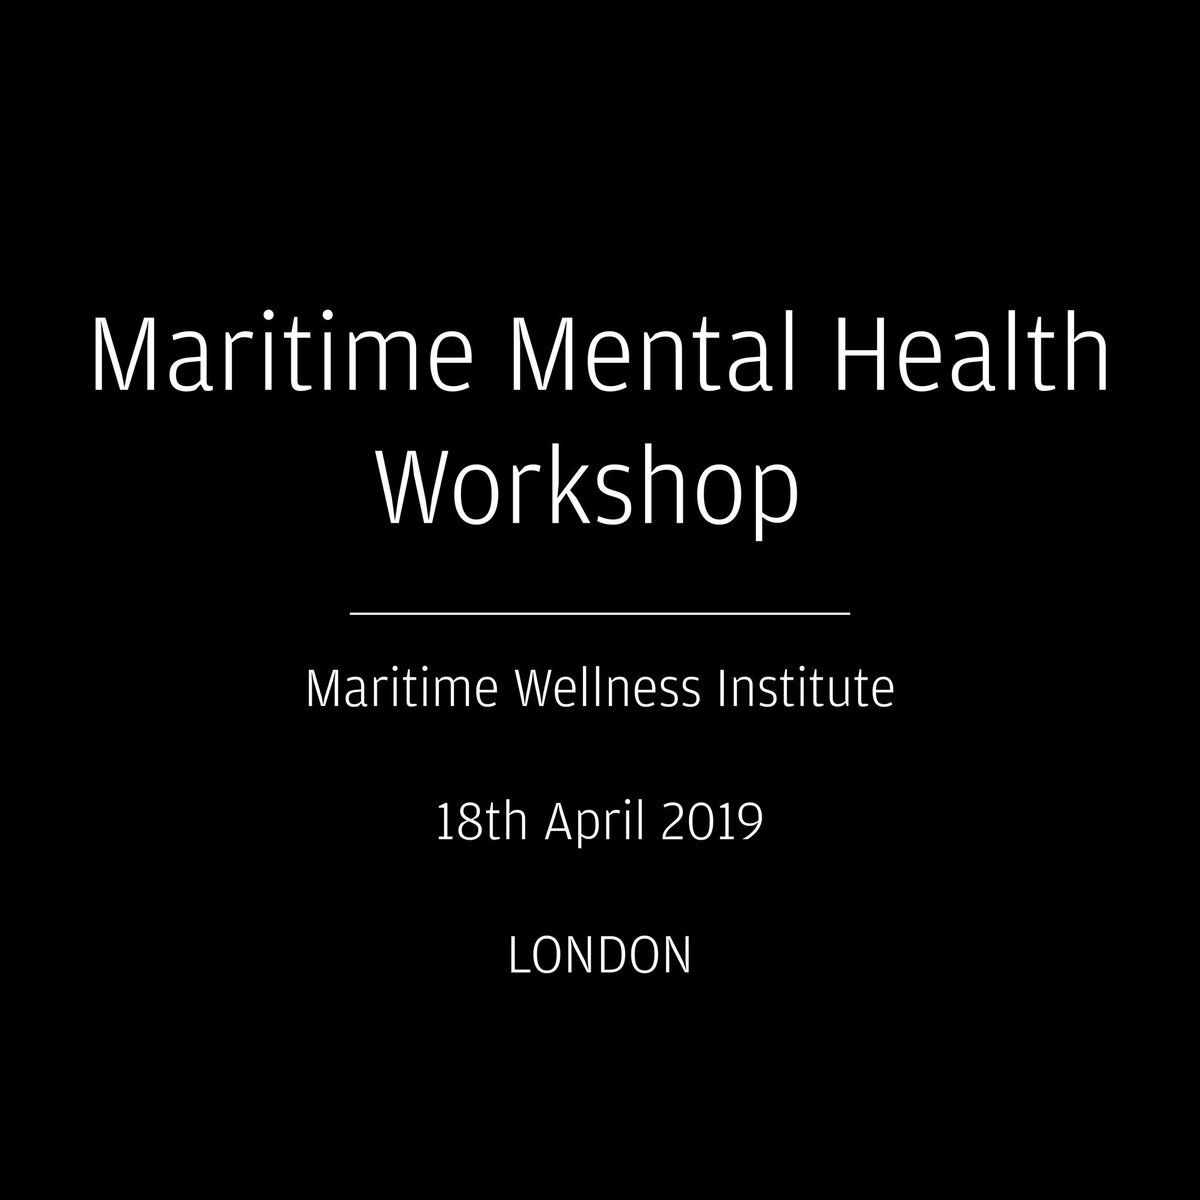 Register your interest now. 
maritimewellnessinstitute.com/maritime-menta…

#maritime #wellness #mentalhealth #health #crewhealthmatters #crewhealth #wellnessatsea